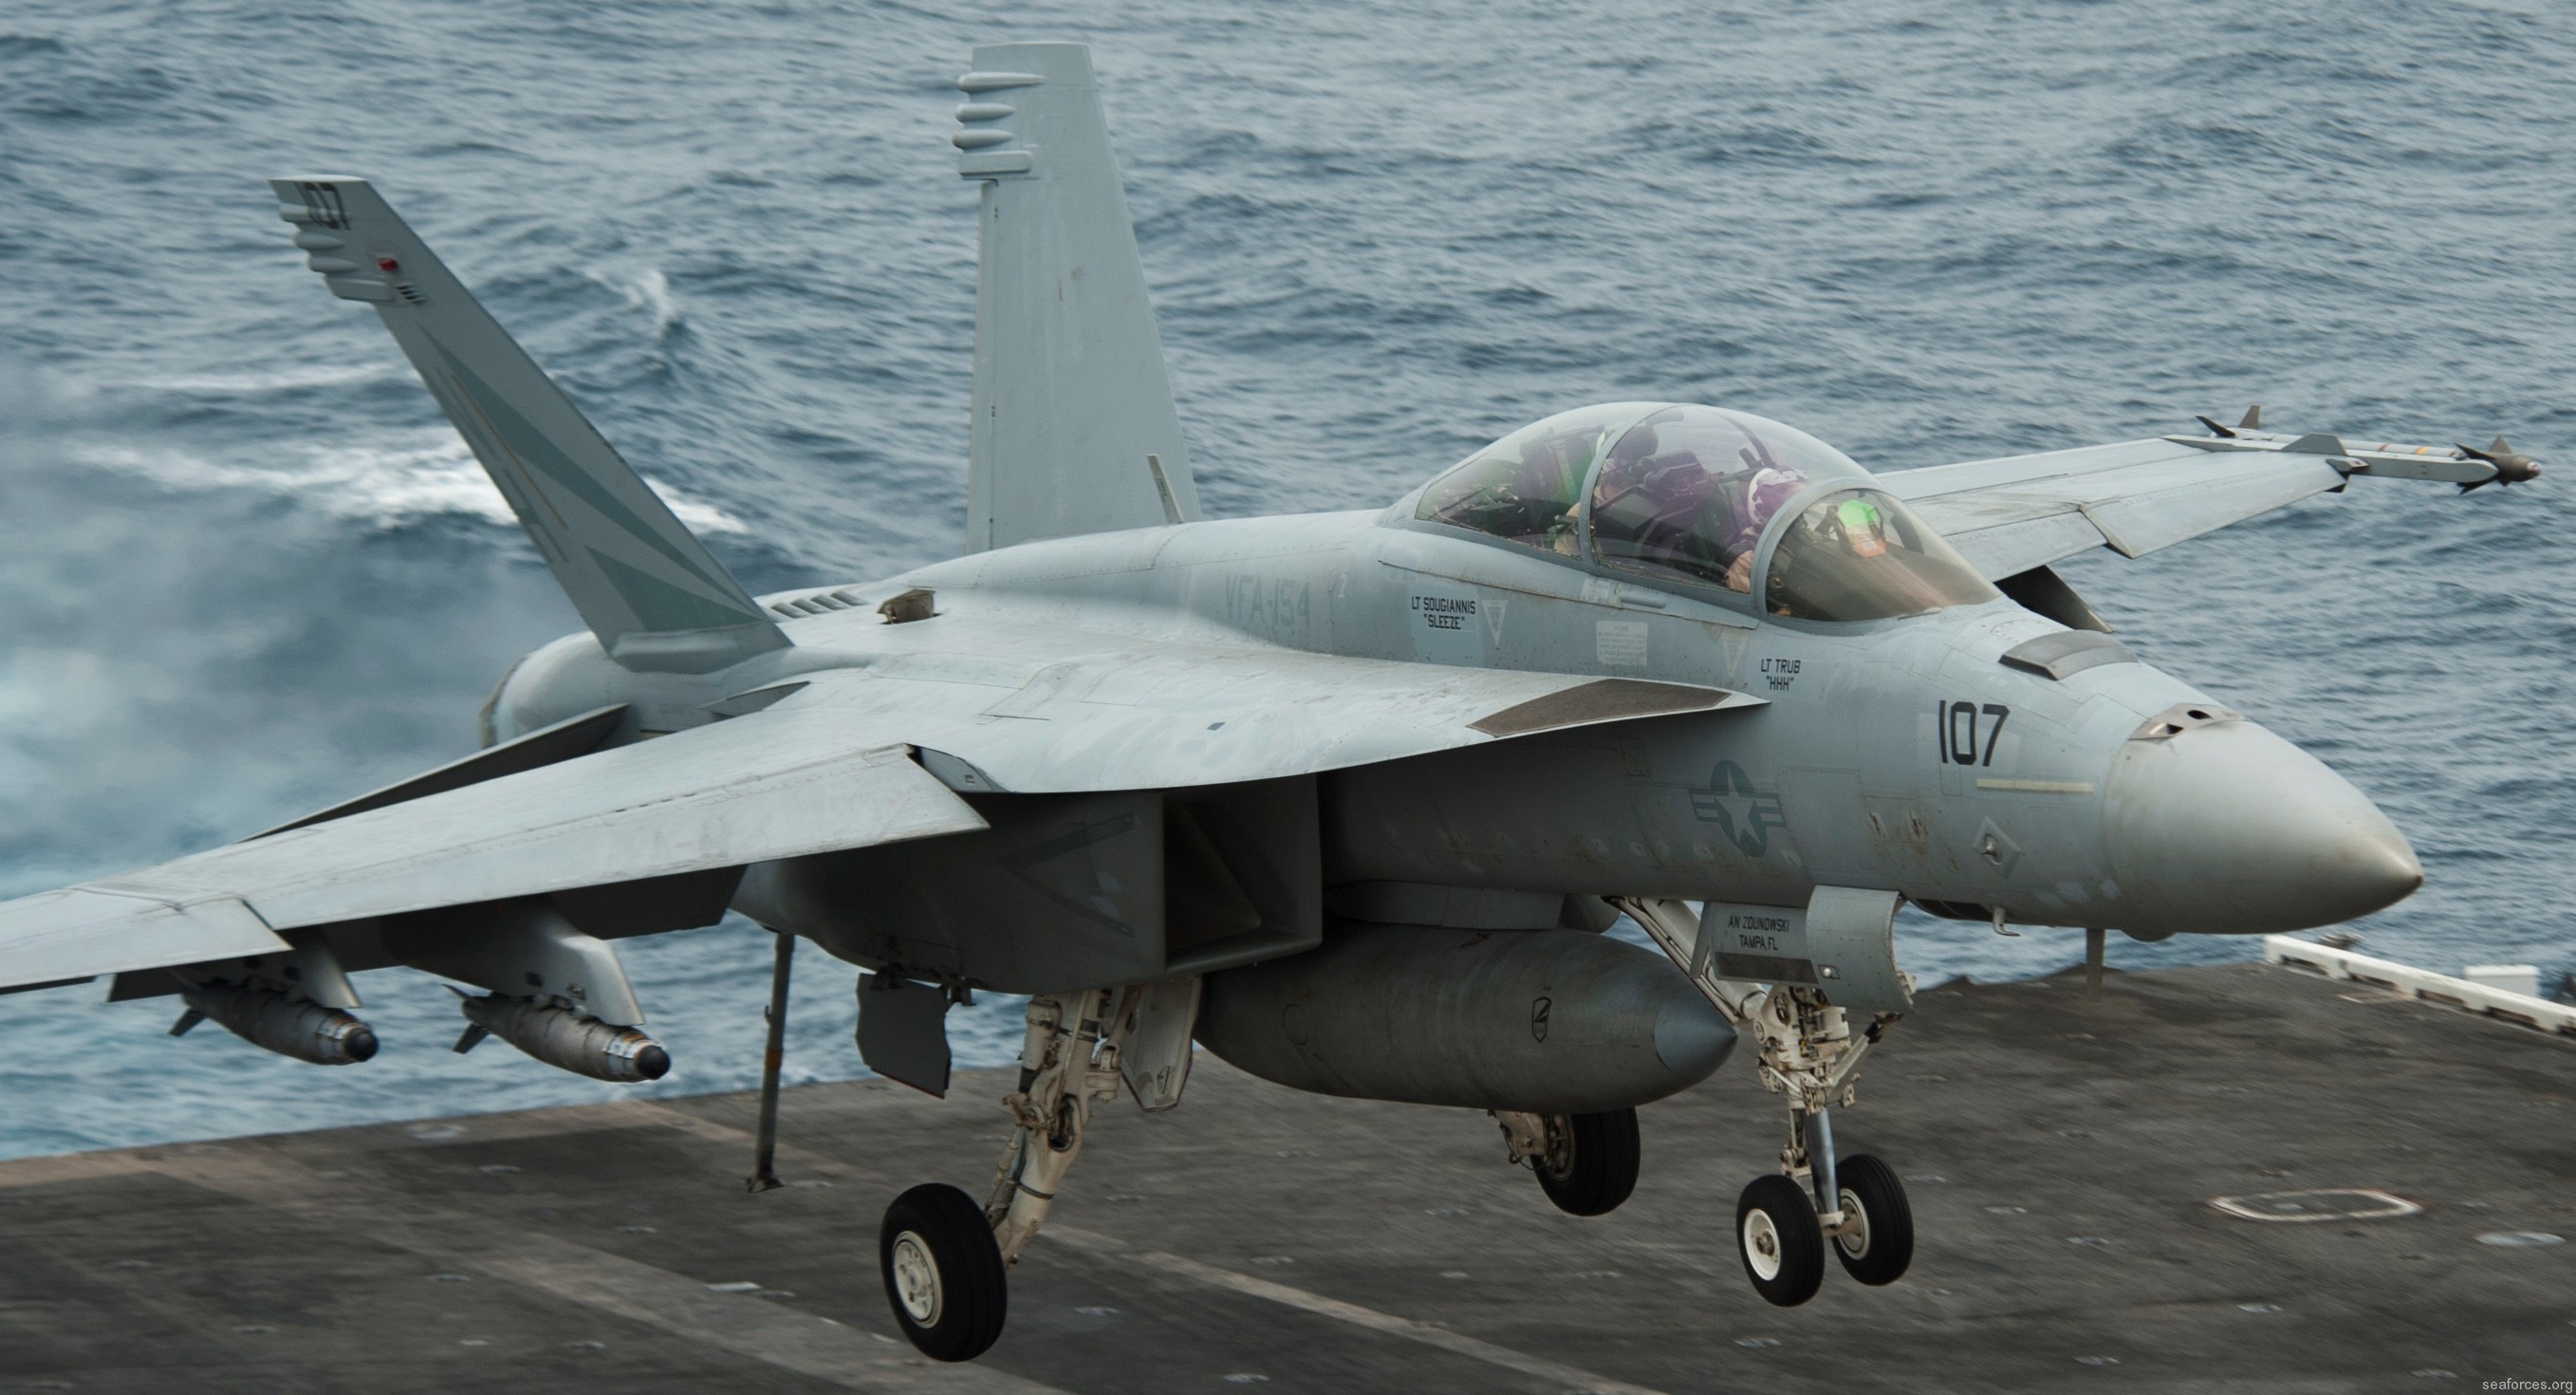 vfa-154 black knights strike fighter squadron navy f/a-18f super hornet carrier air wing cvw-11 uss nimitz cvn-68 73